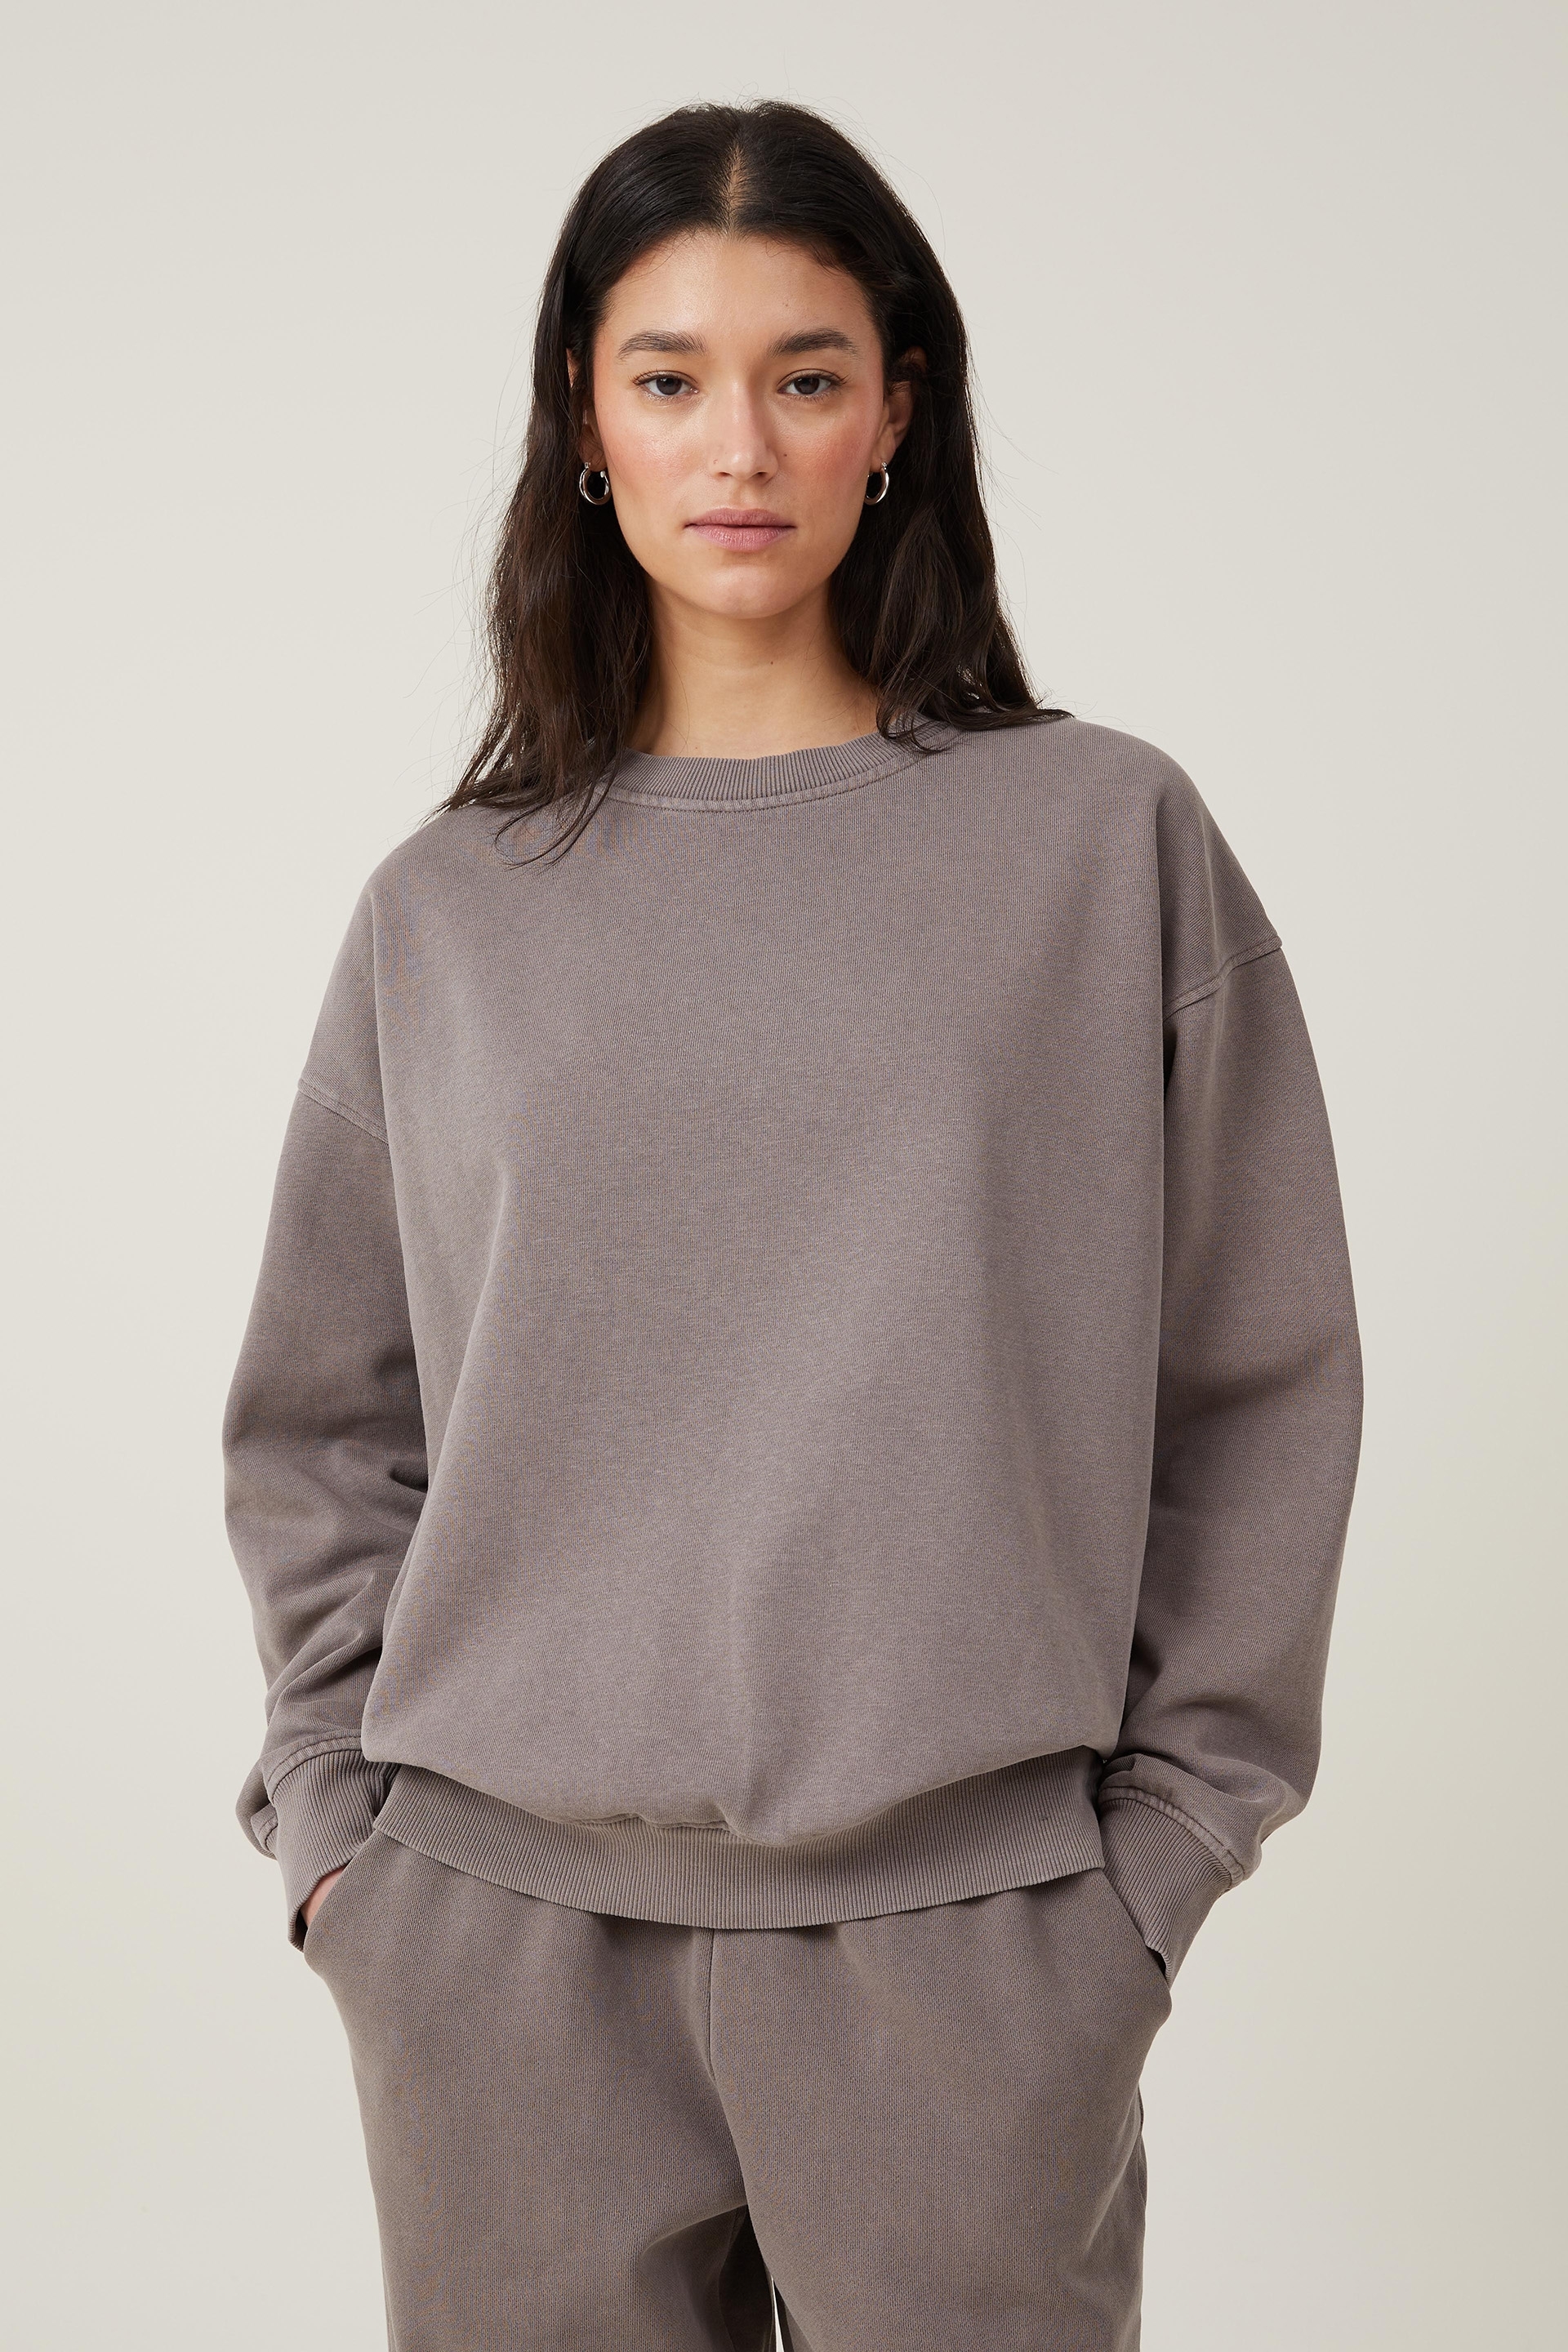 Cotton On Women - Classic Washed Crew Sweatshirt - Washed mocha